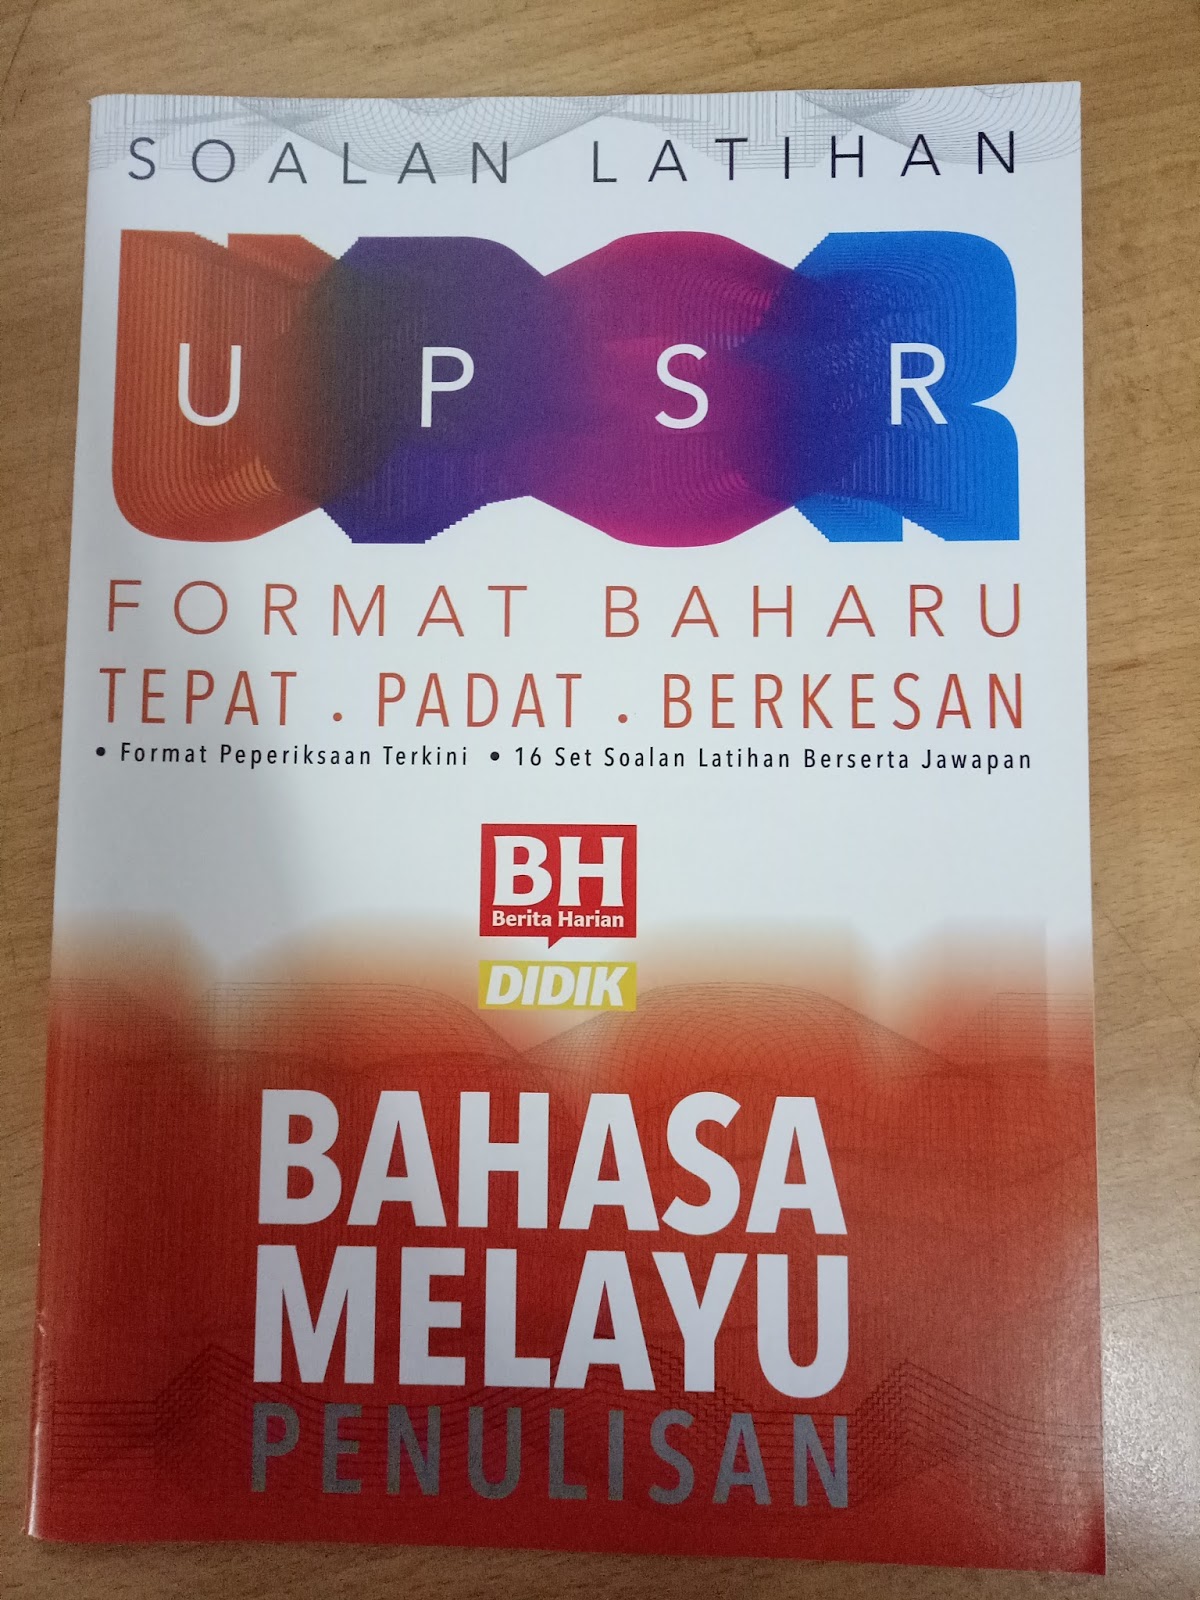 Buku Set Soalan Latihan UPSR BH Didik - Pendidik2u